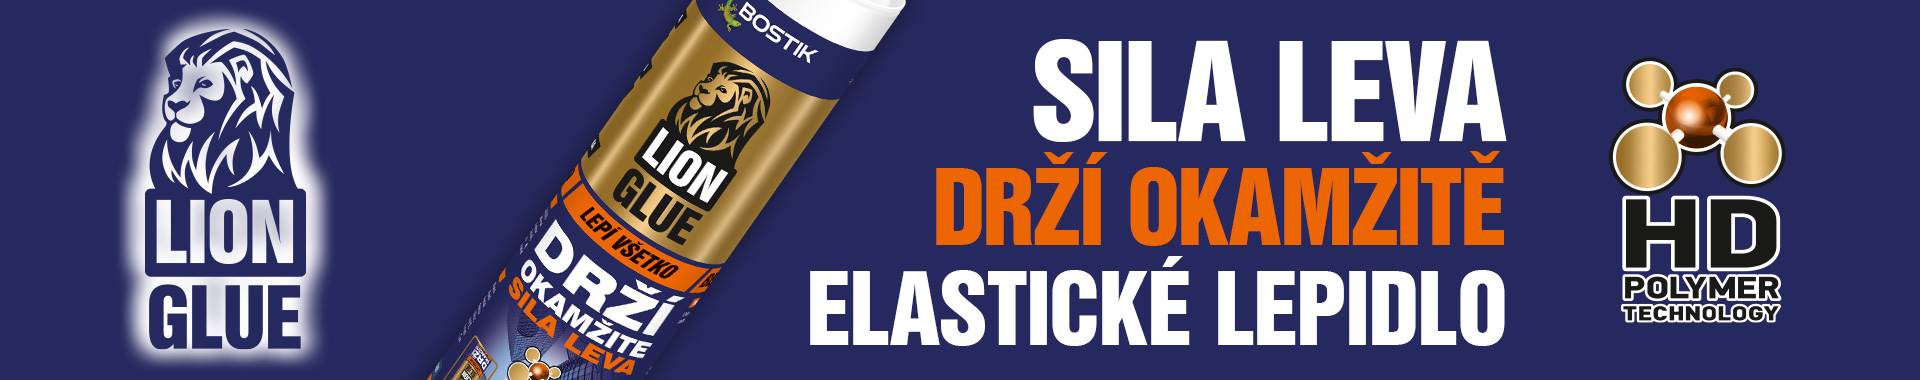 Bostik DIY Slovakia Lion Glue Teaser 1920x380